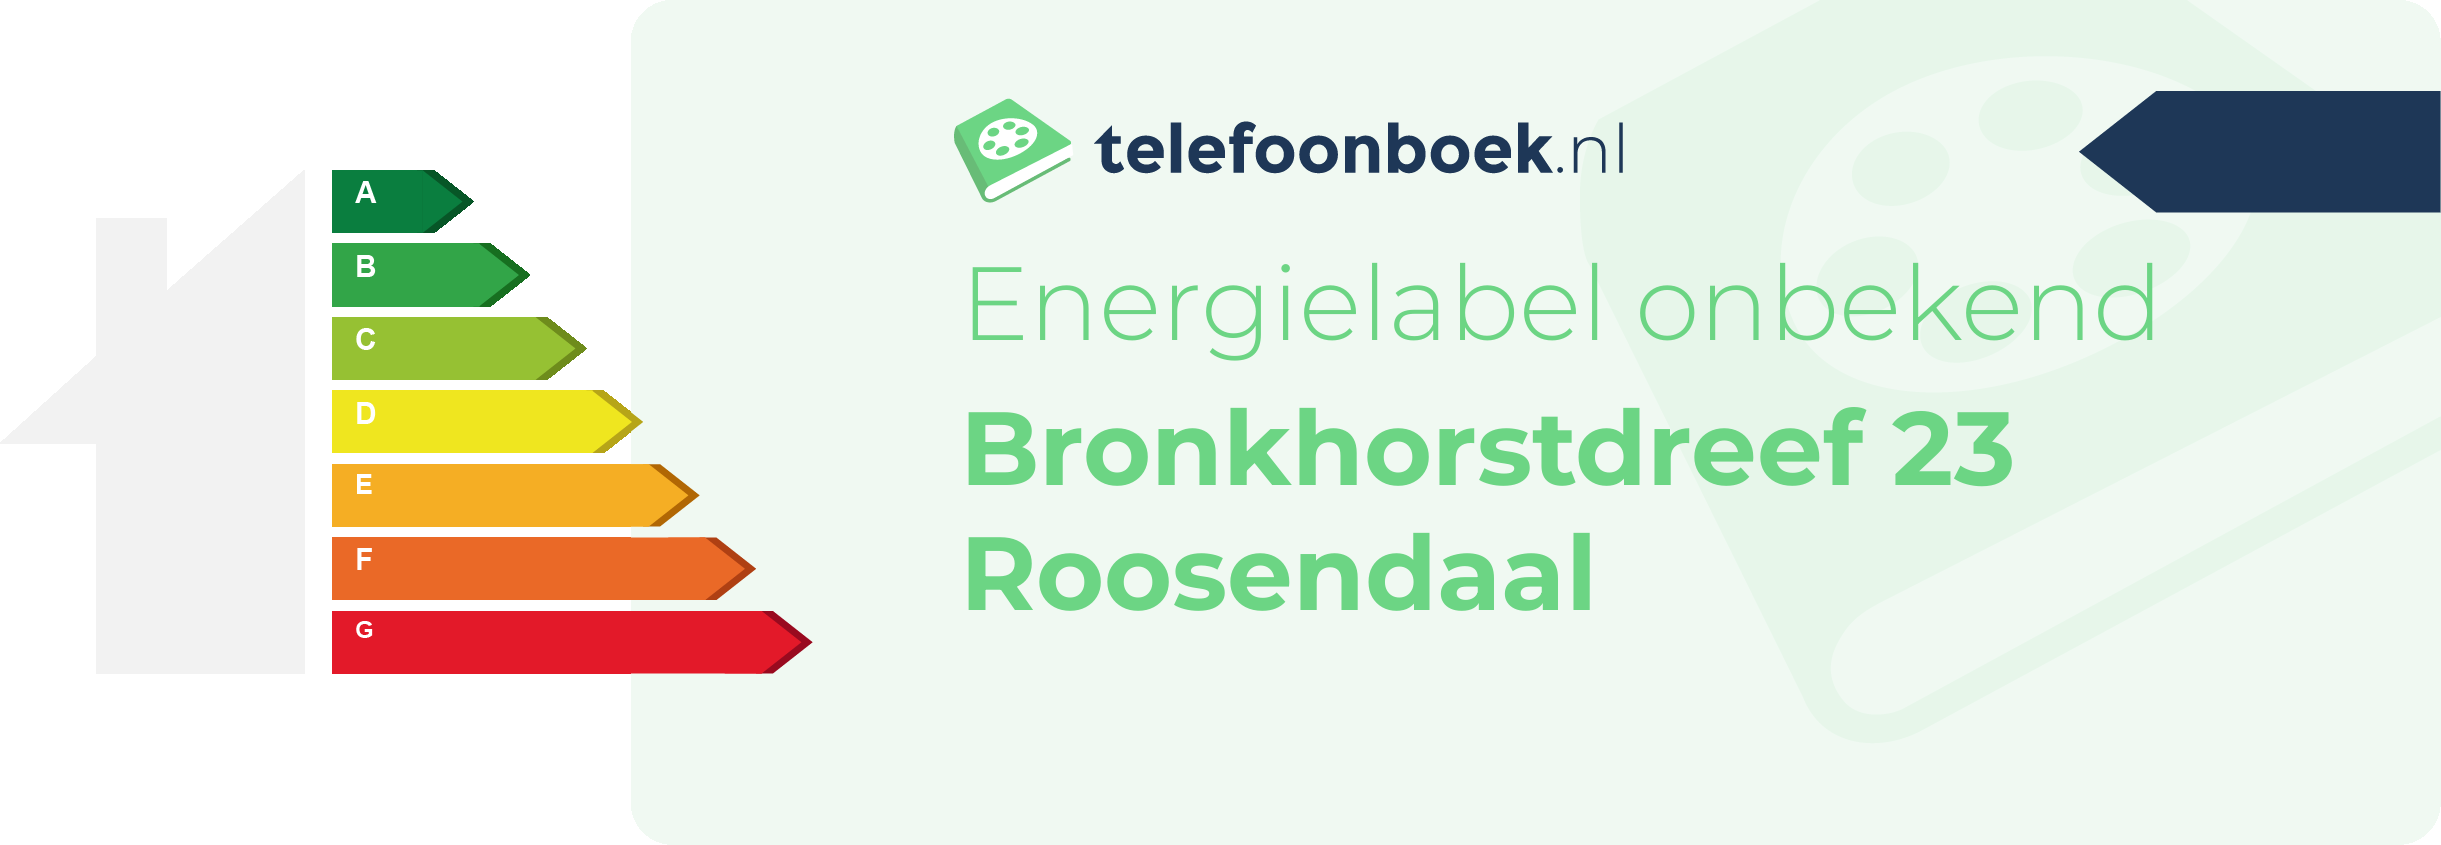 Energielabel Bronkhorstdreef 23 Roosendaal